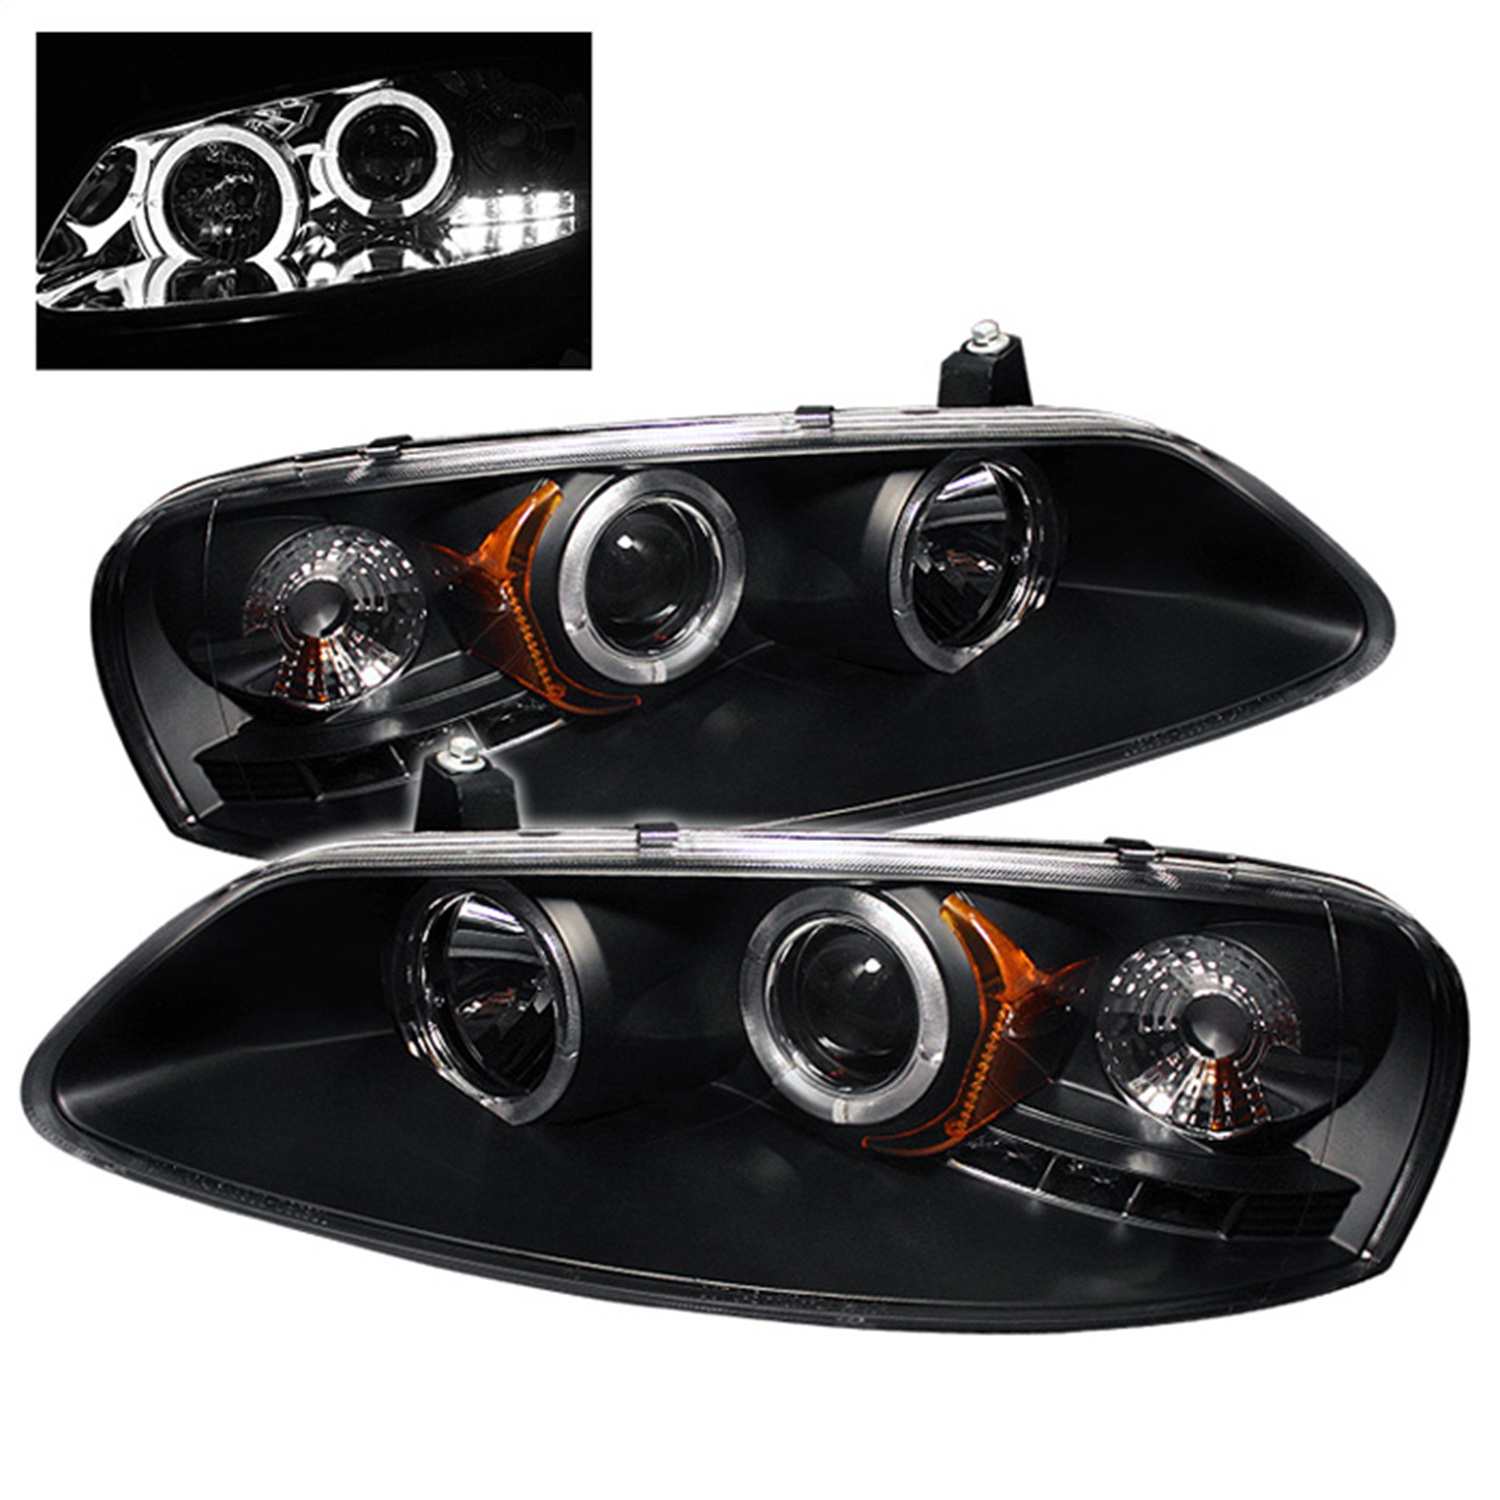 Spyder Auto 5009623 Halo Projector Headlights Fits 01-06 Sebring Stratus